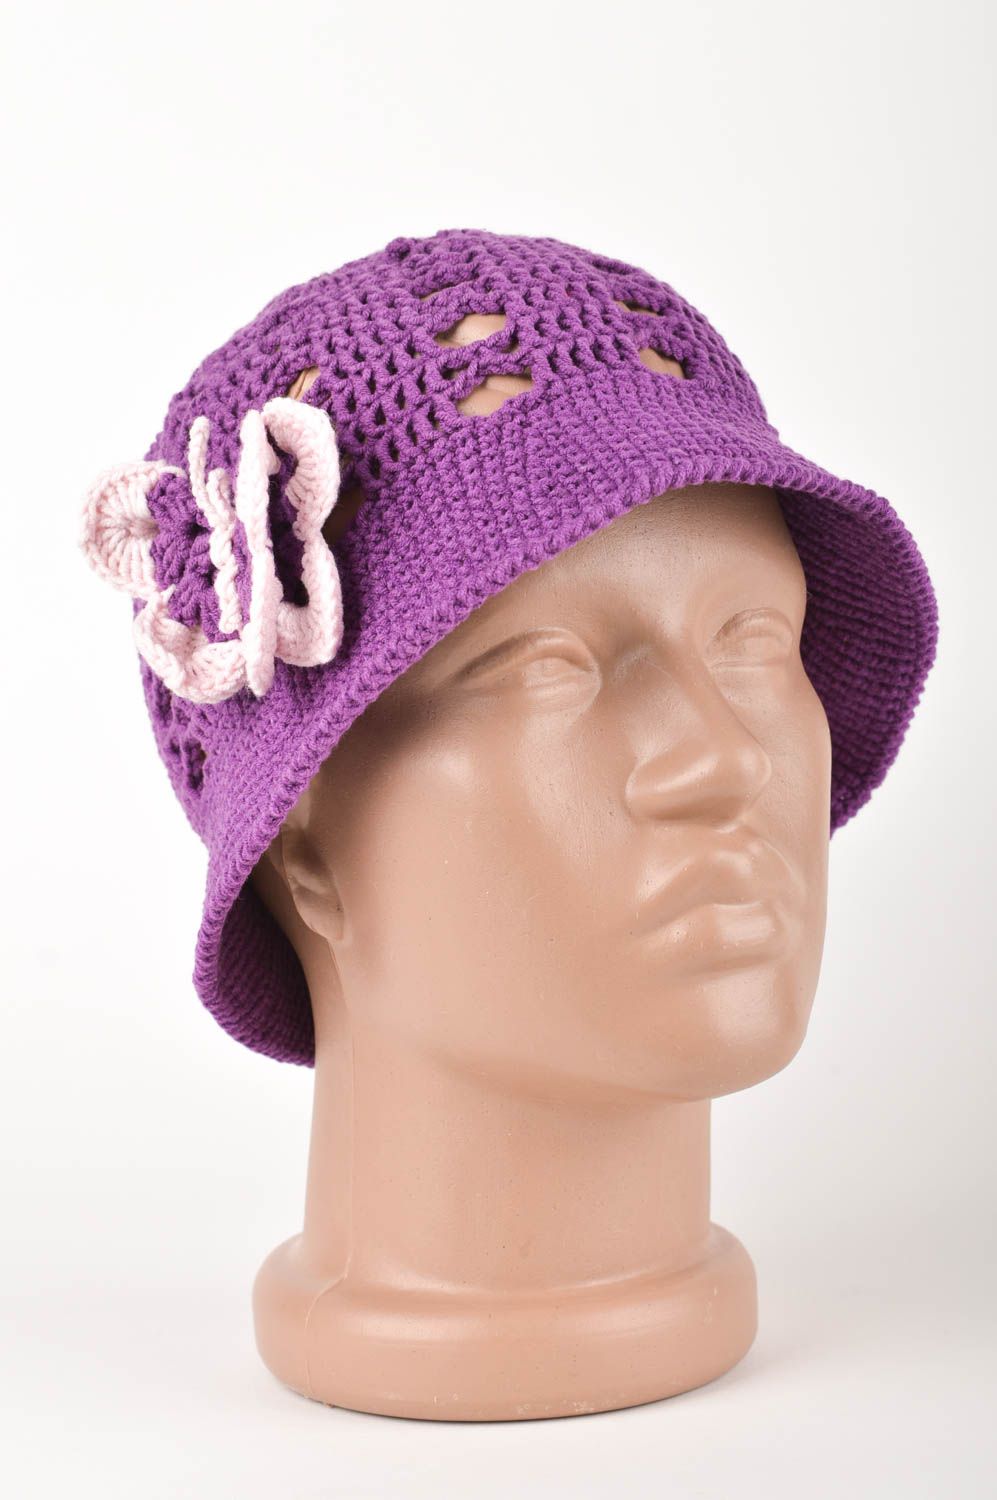 Handmade crocheted hat for girls unusual children headwear stylish summer hat photo 1